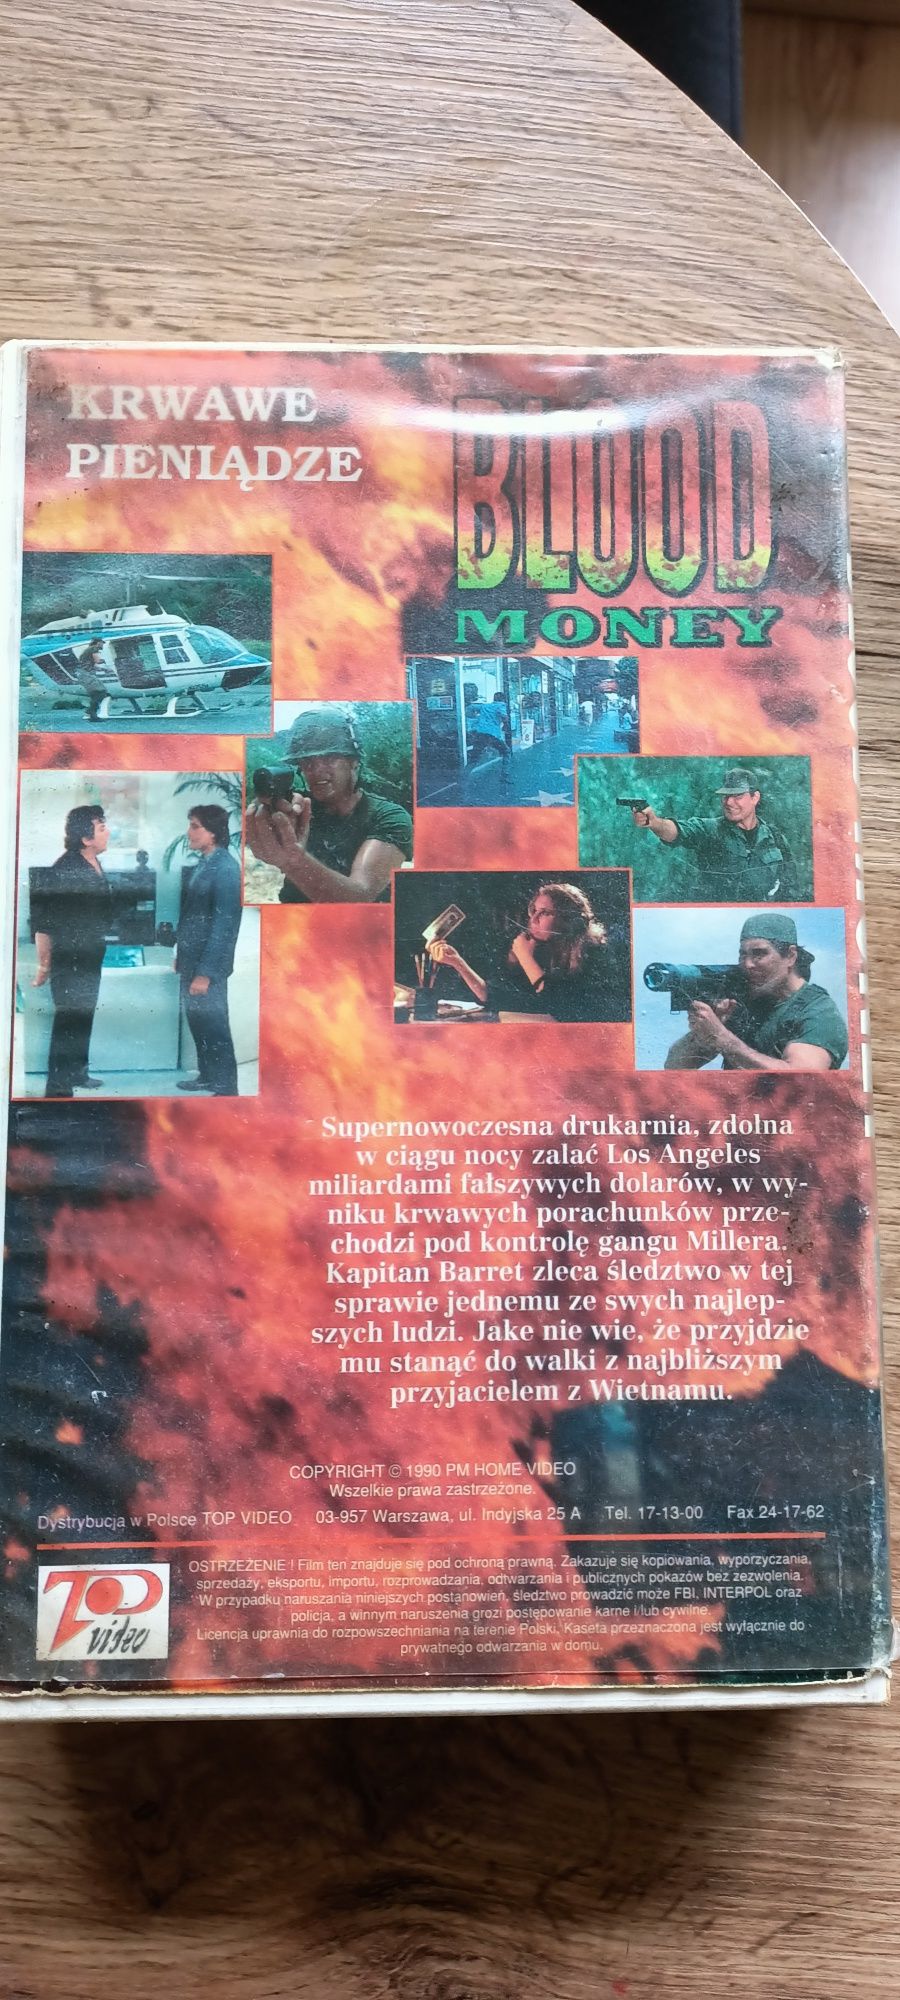 Kaseta VHS z filmem "Blood money" 1990 r.